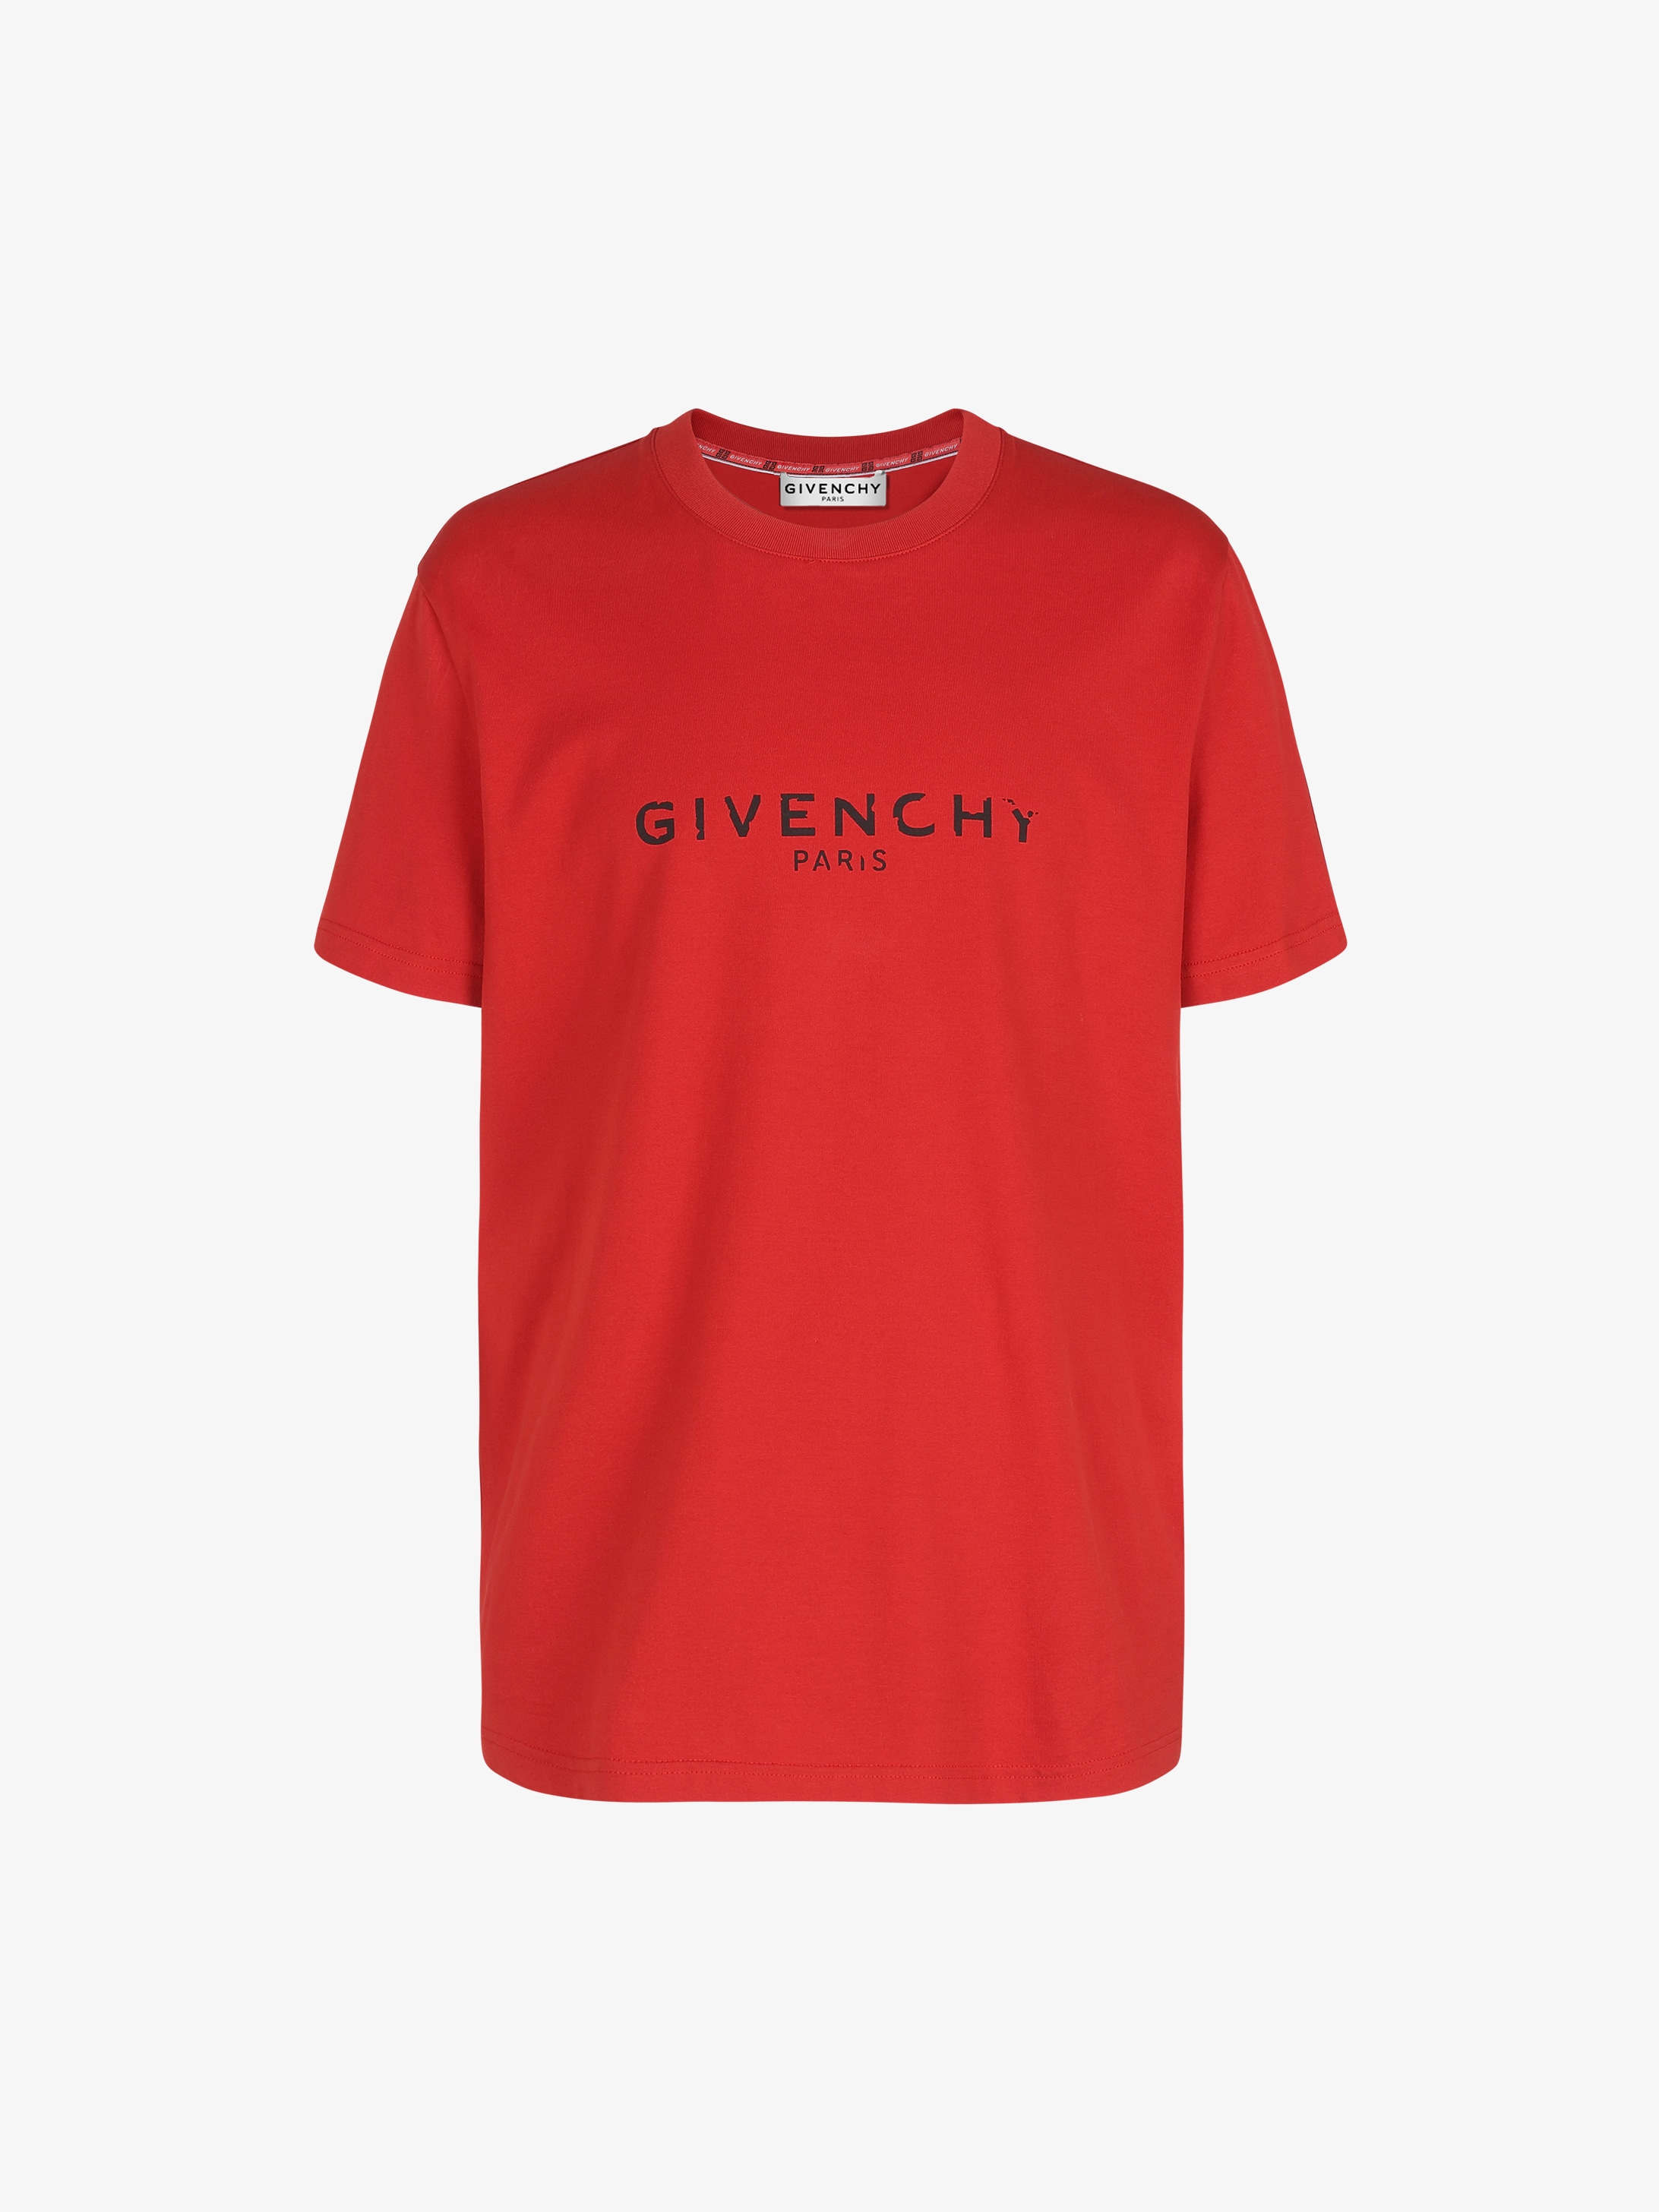 GIVENCHY PARIS oversized t-shirt 